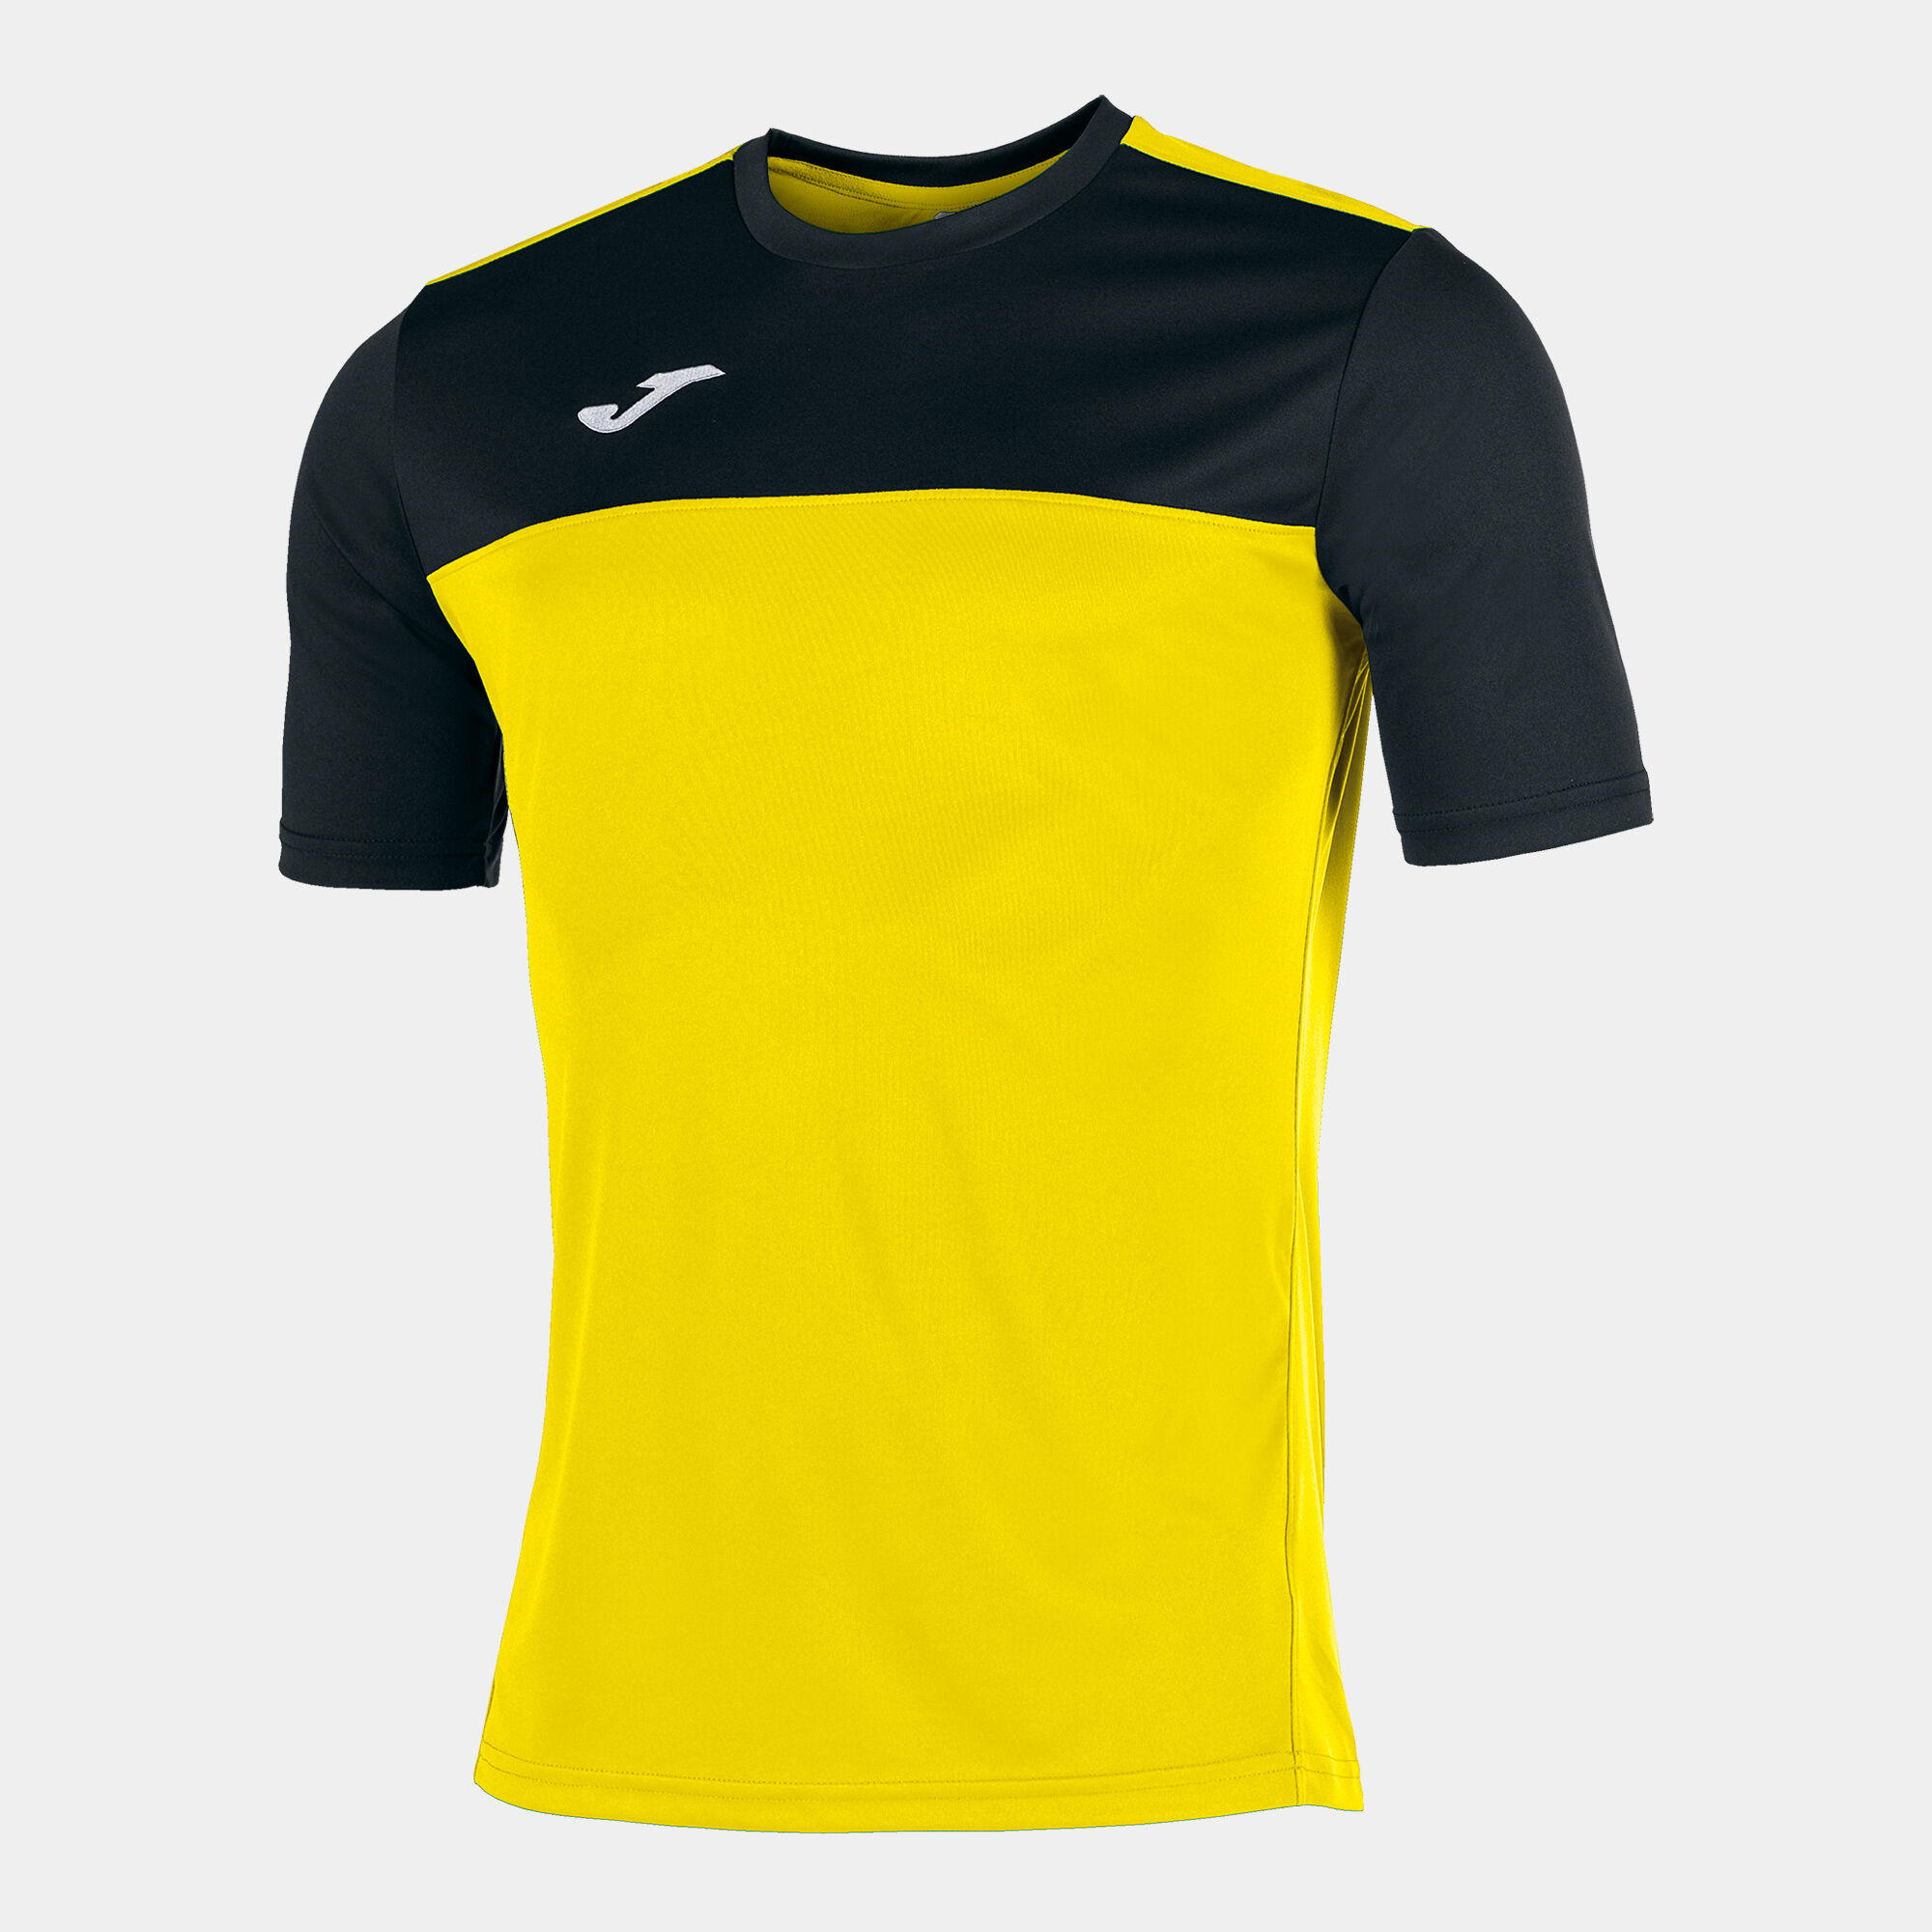 Shirt short sleeve man Winner yellow black